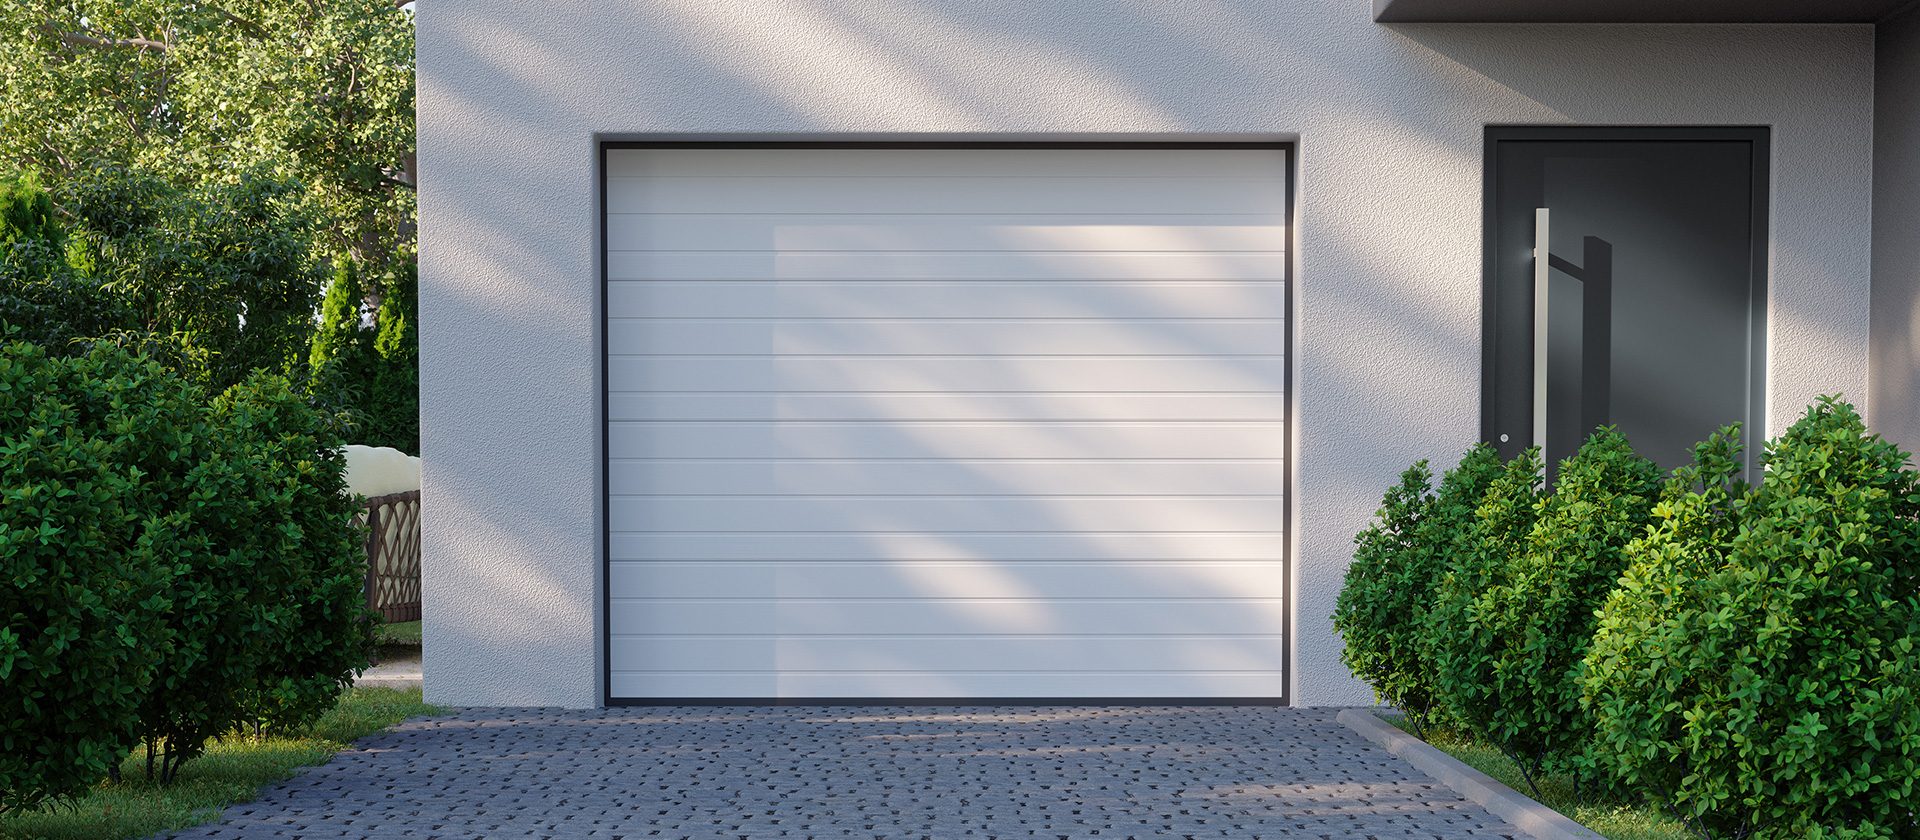 Brama segmentowa garażowa – montaż